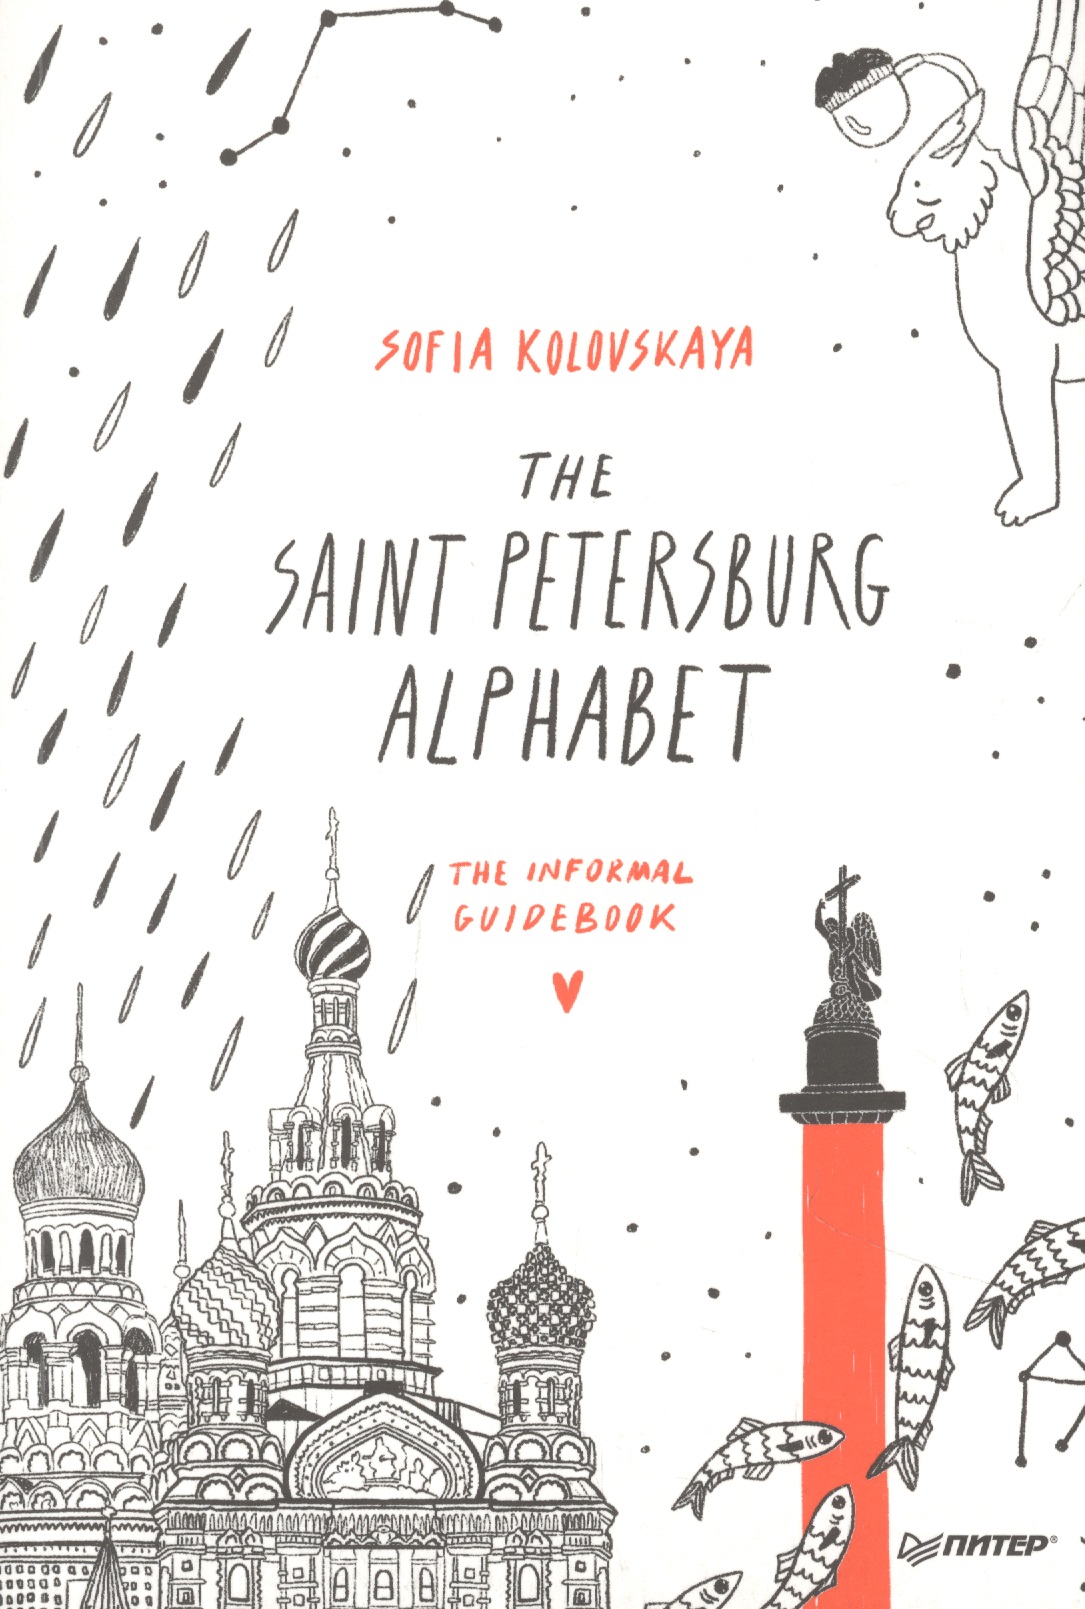 Коловская С. З. The Saint Petersburg Alphabet. The informal guidebook volkov solomon st petersburg cultural history